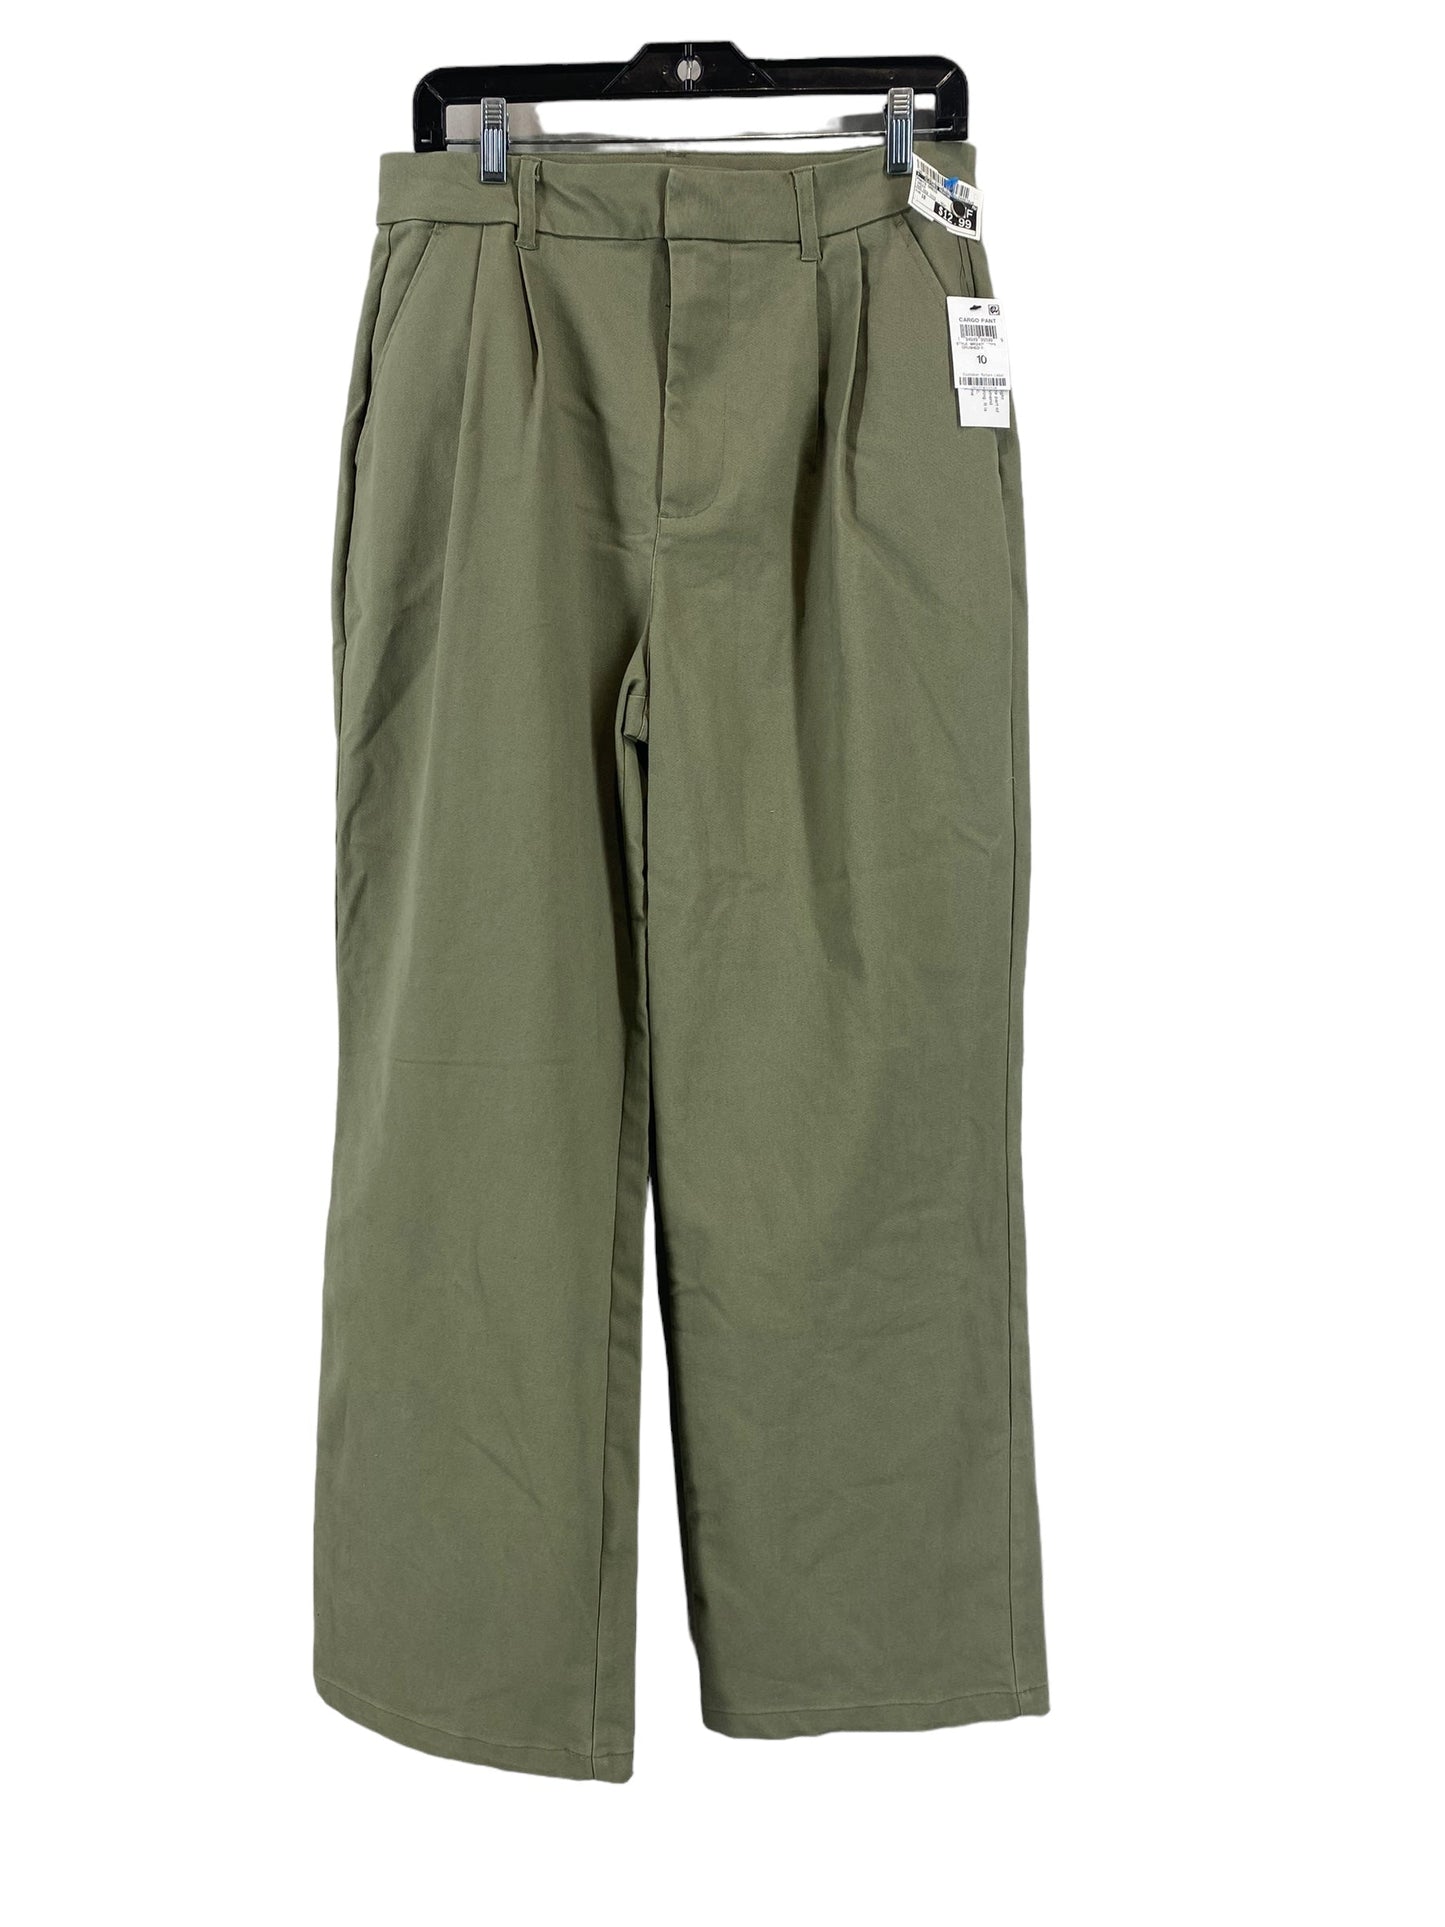 Green Pants Dress Clothes Mentor, Size 10